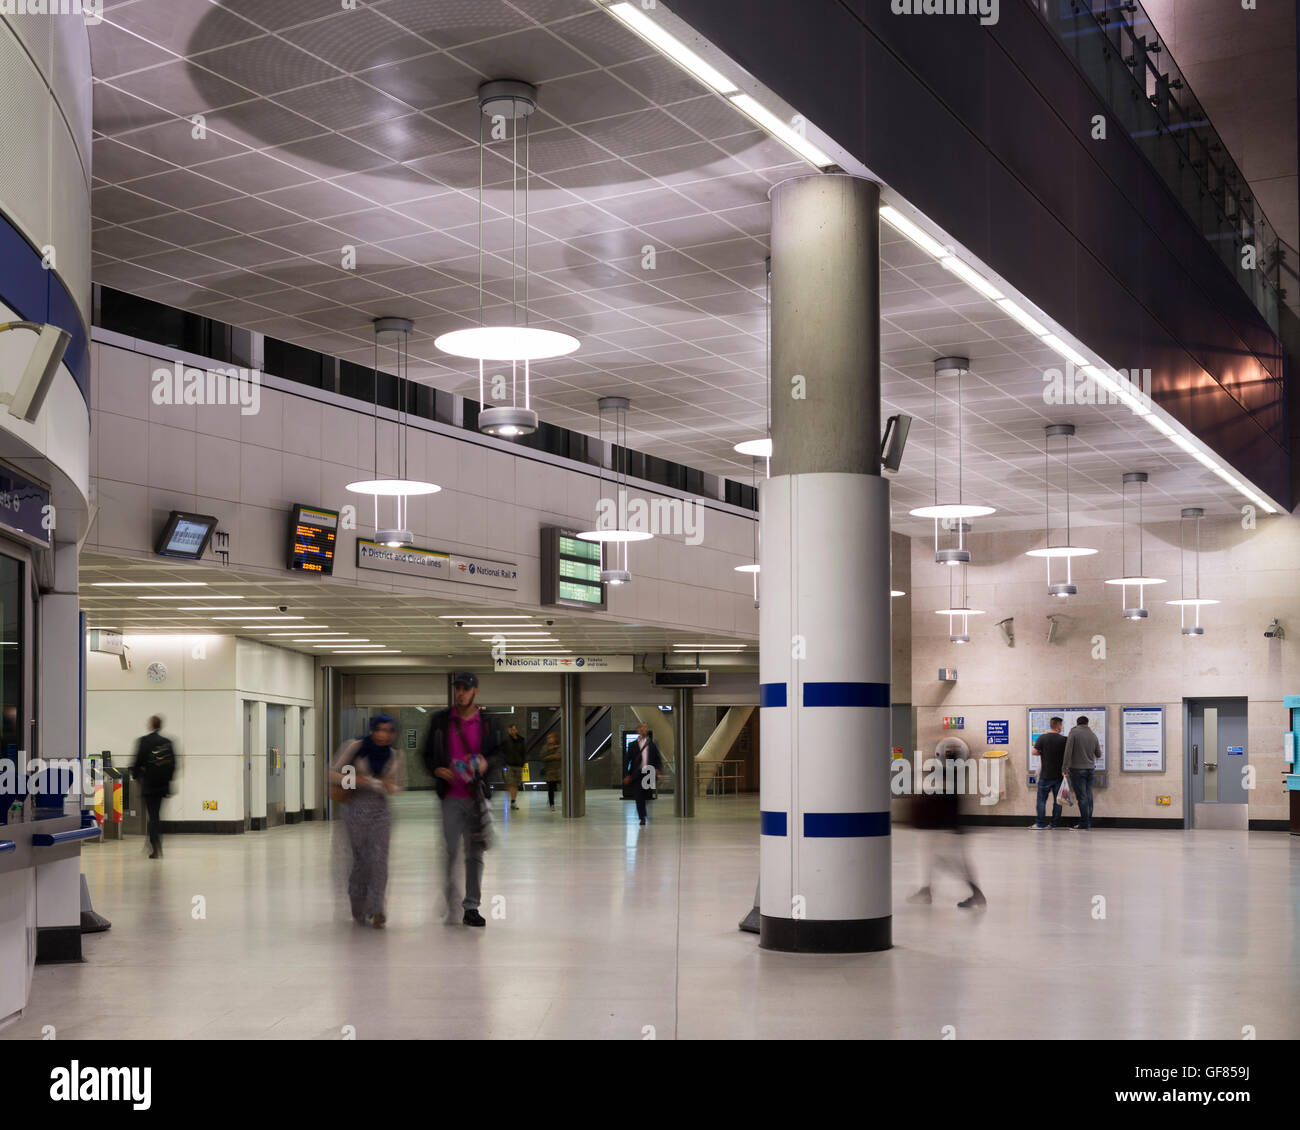 Underground station ticket hall. Blackfriars Station, London, United Kingdom. Architect: Pascall+Watson architects Ltd, 2012. Stock Photo